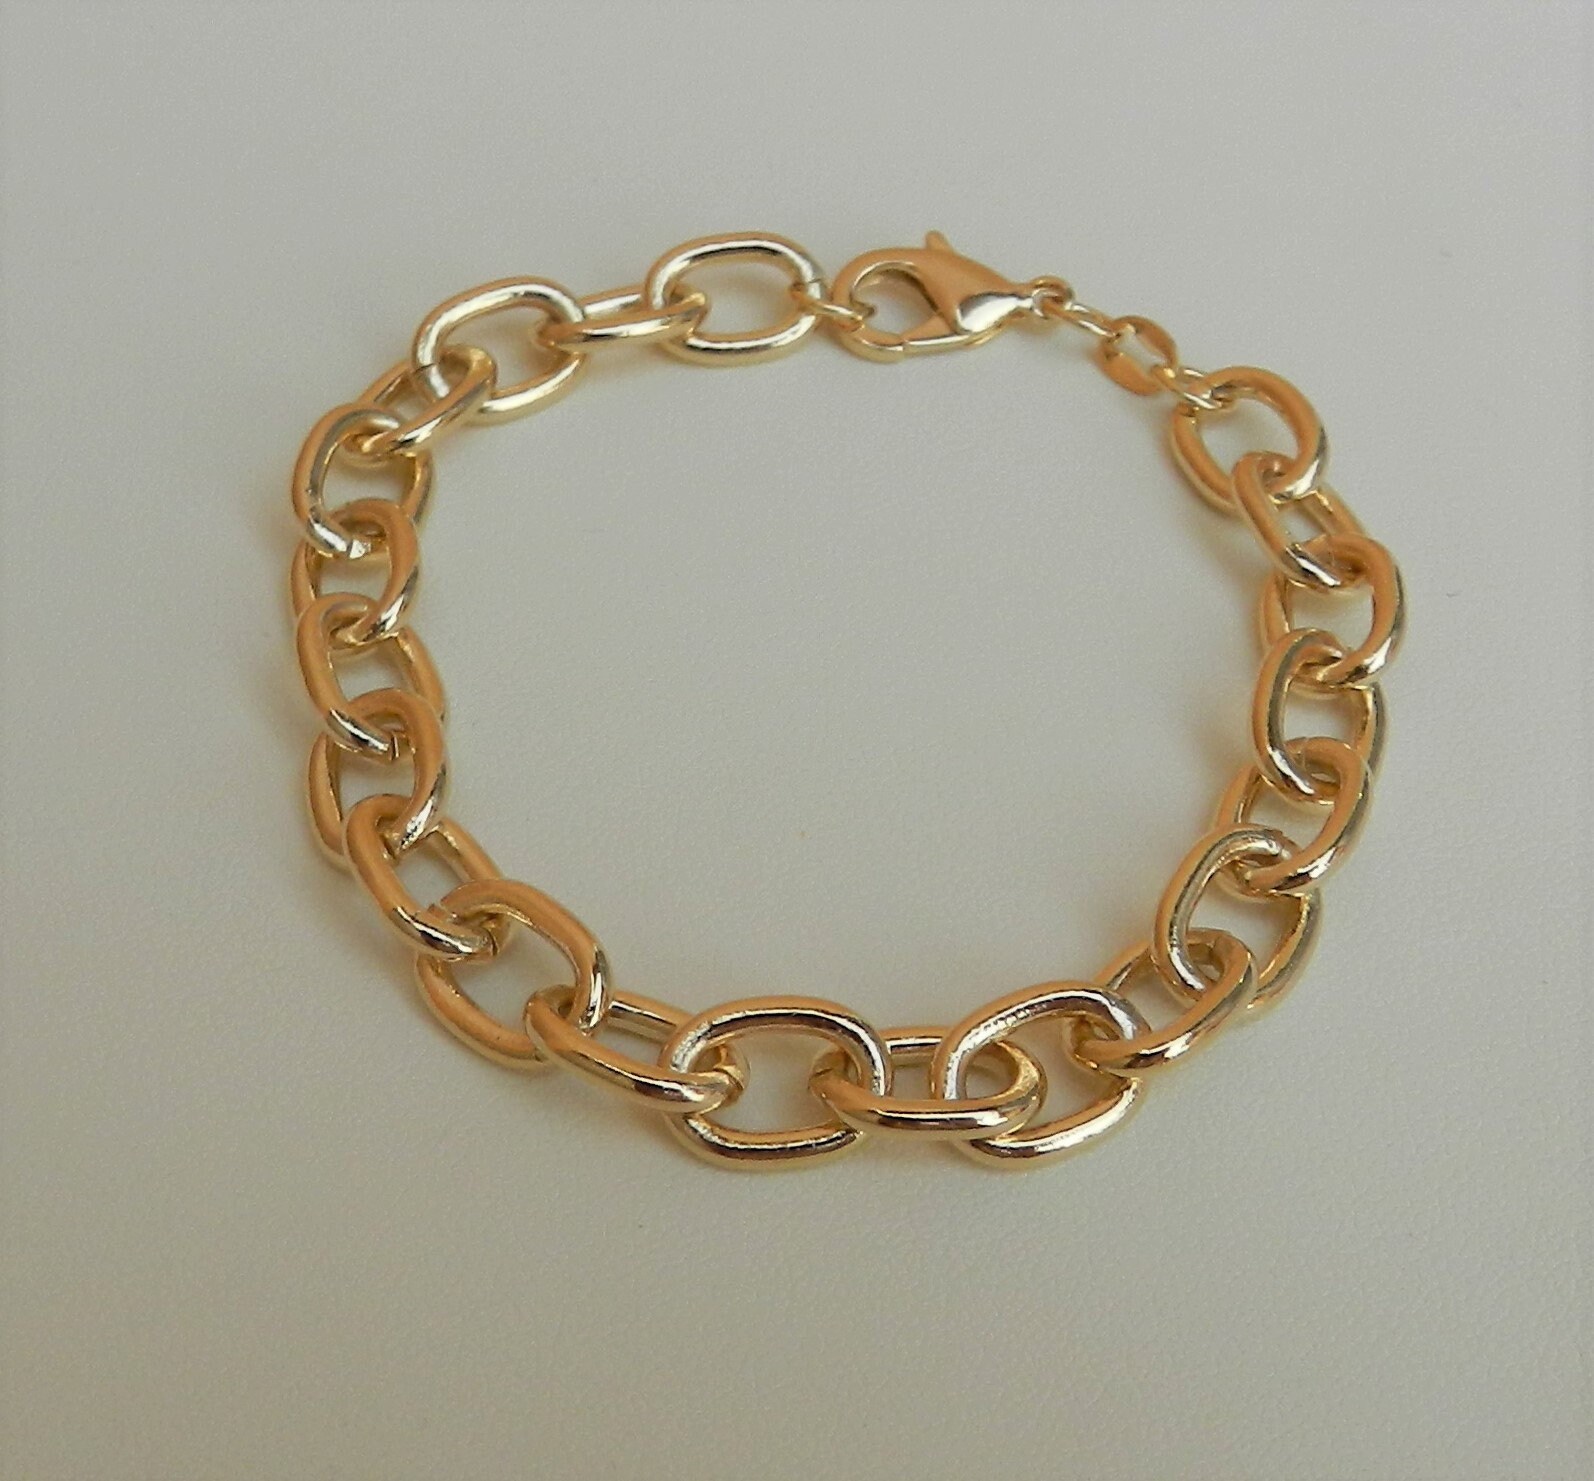 Chunky Gold Bracelet 18K Gold Filled Bracelet Cable Link | Etsy